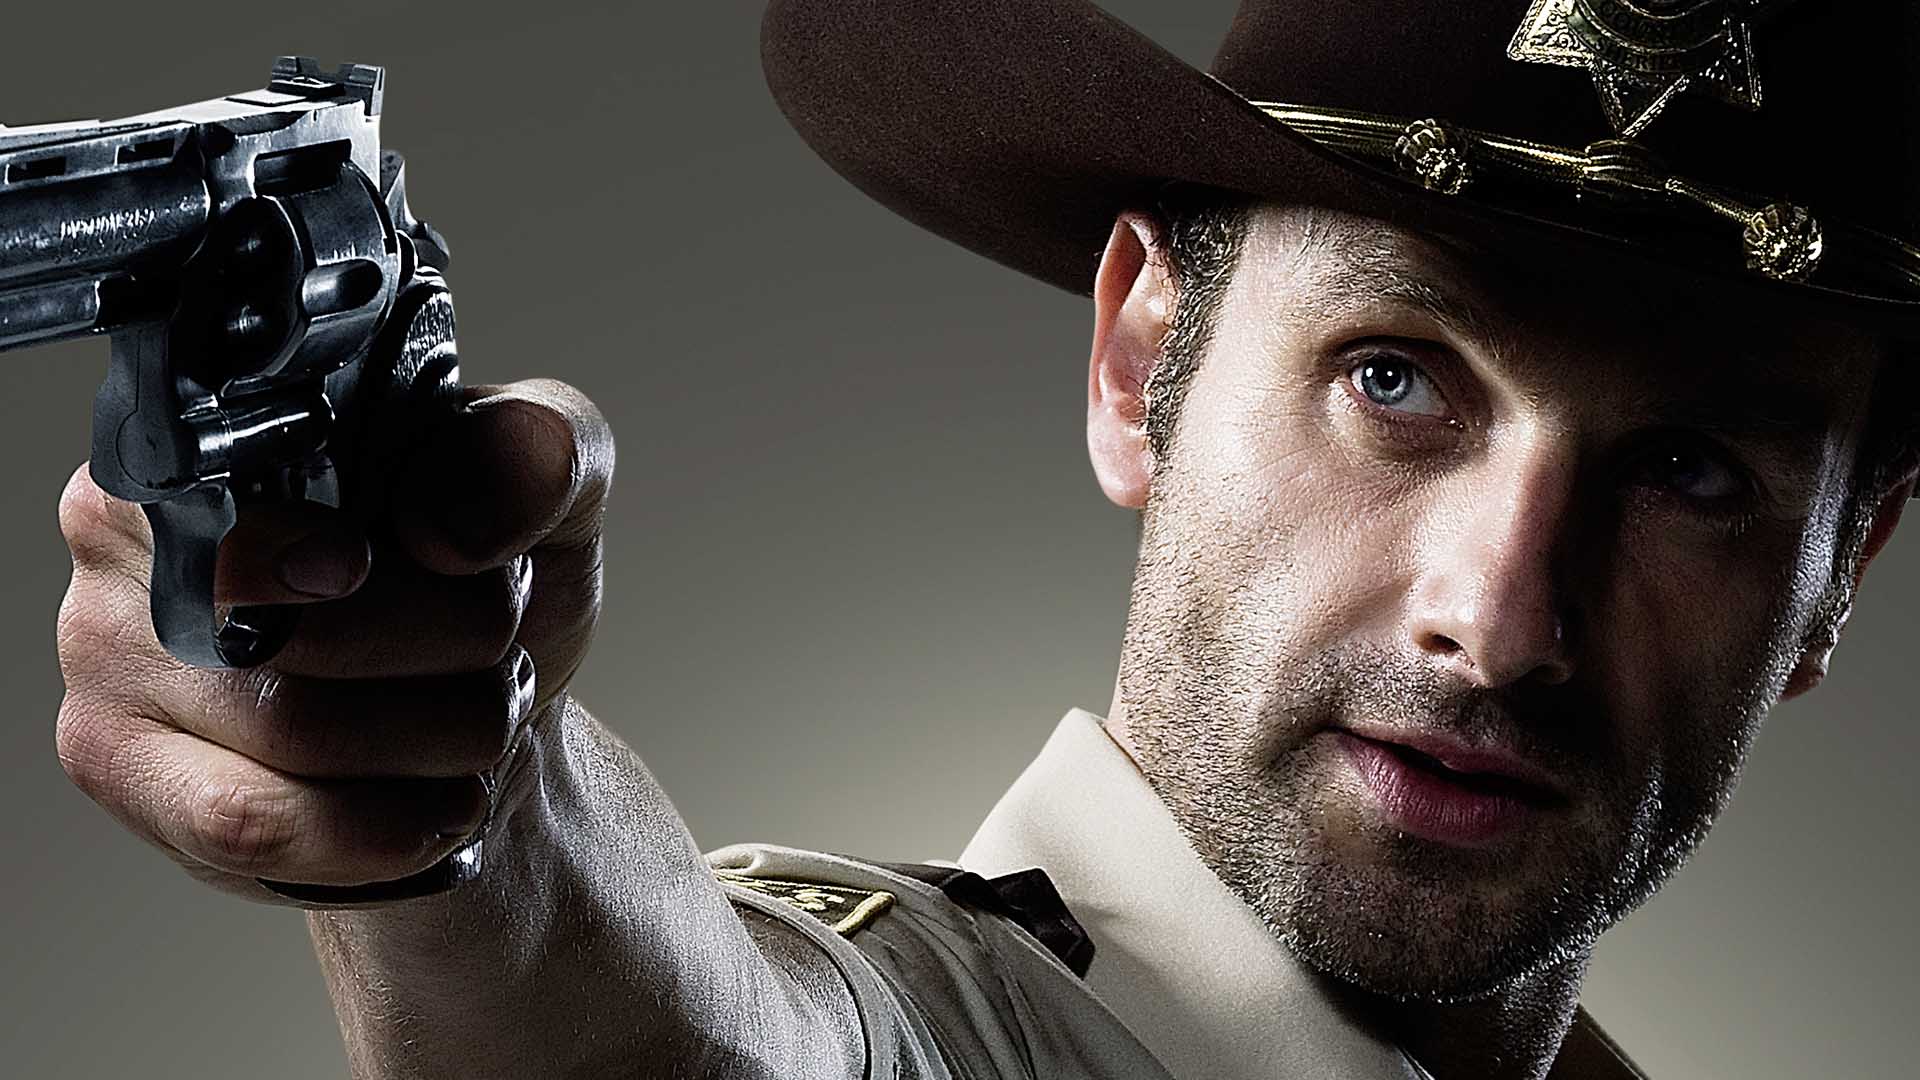 Video Extra Walking Dead is Rick Grimes?: The Walking